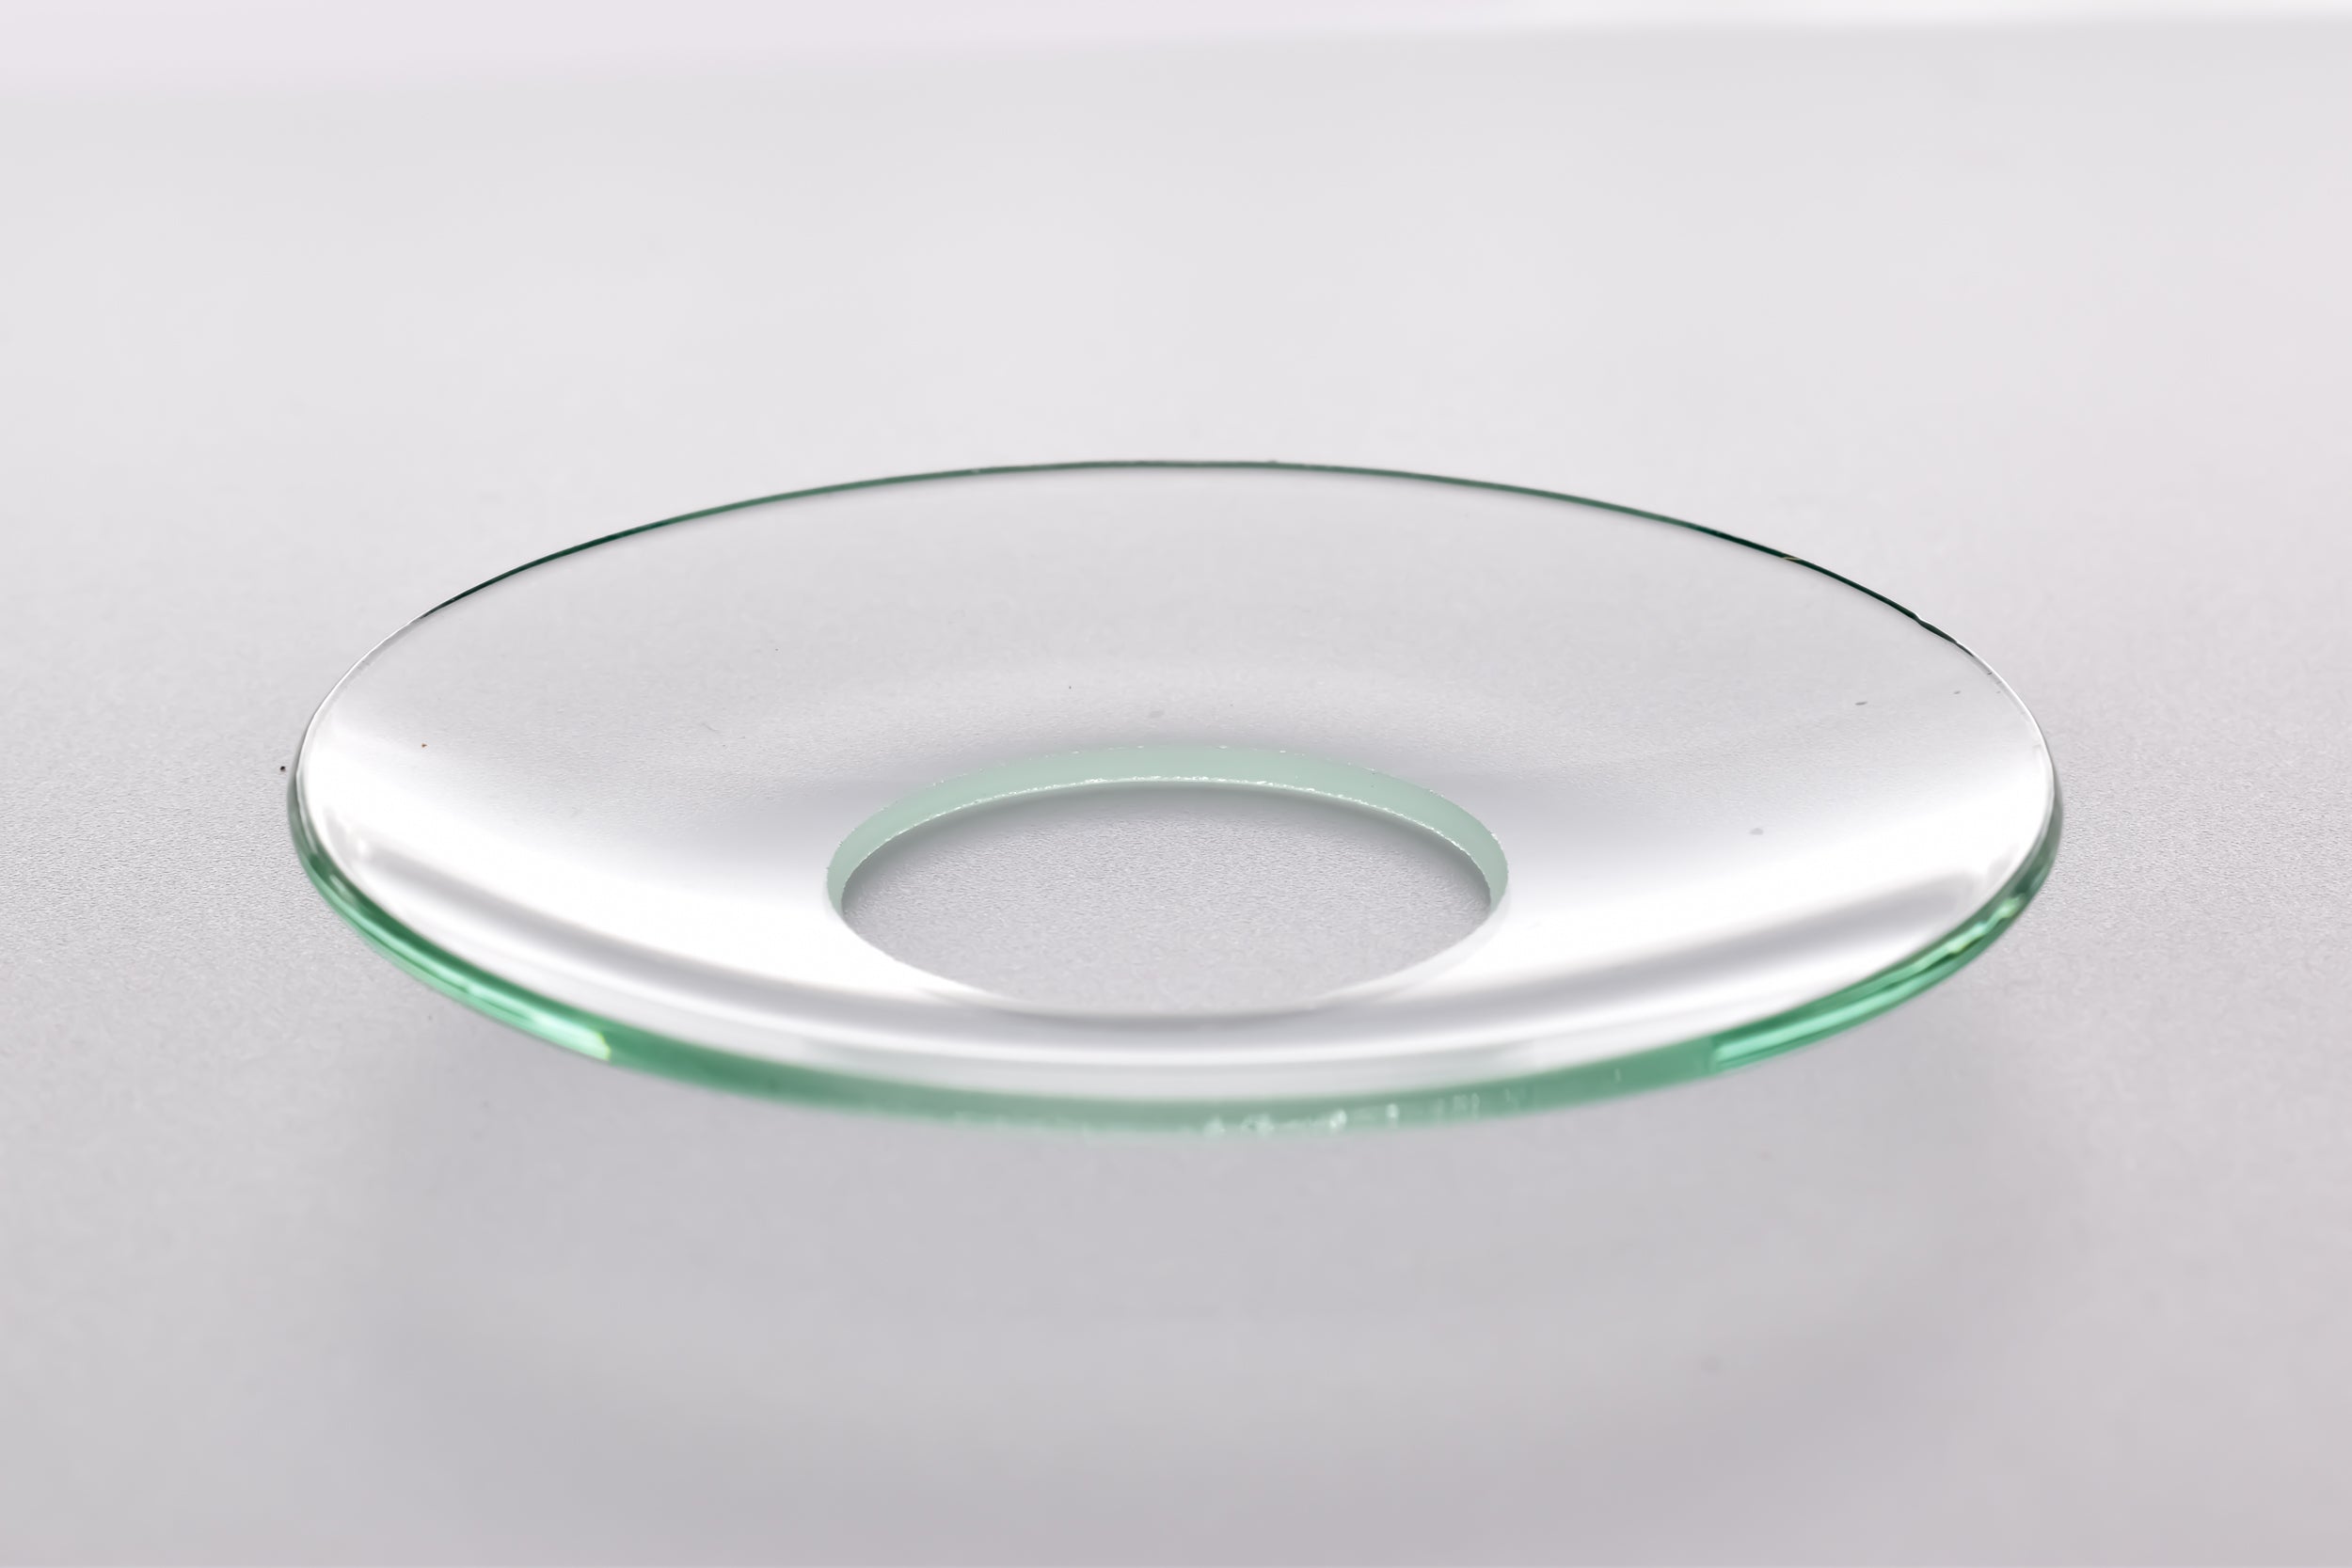 Bobeche - SET OF 10 Clear Plain Glass 2.75 Inch